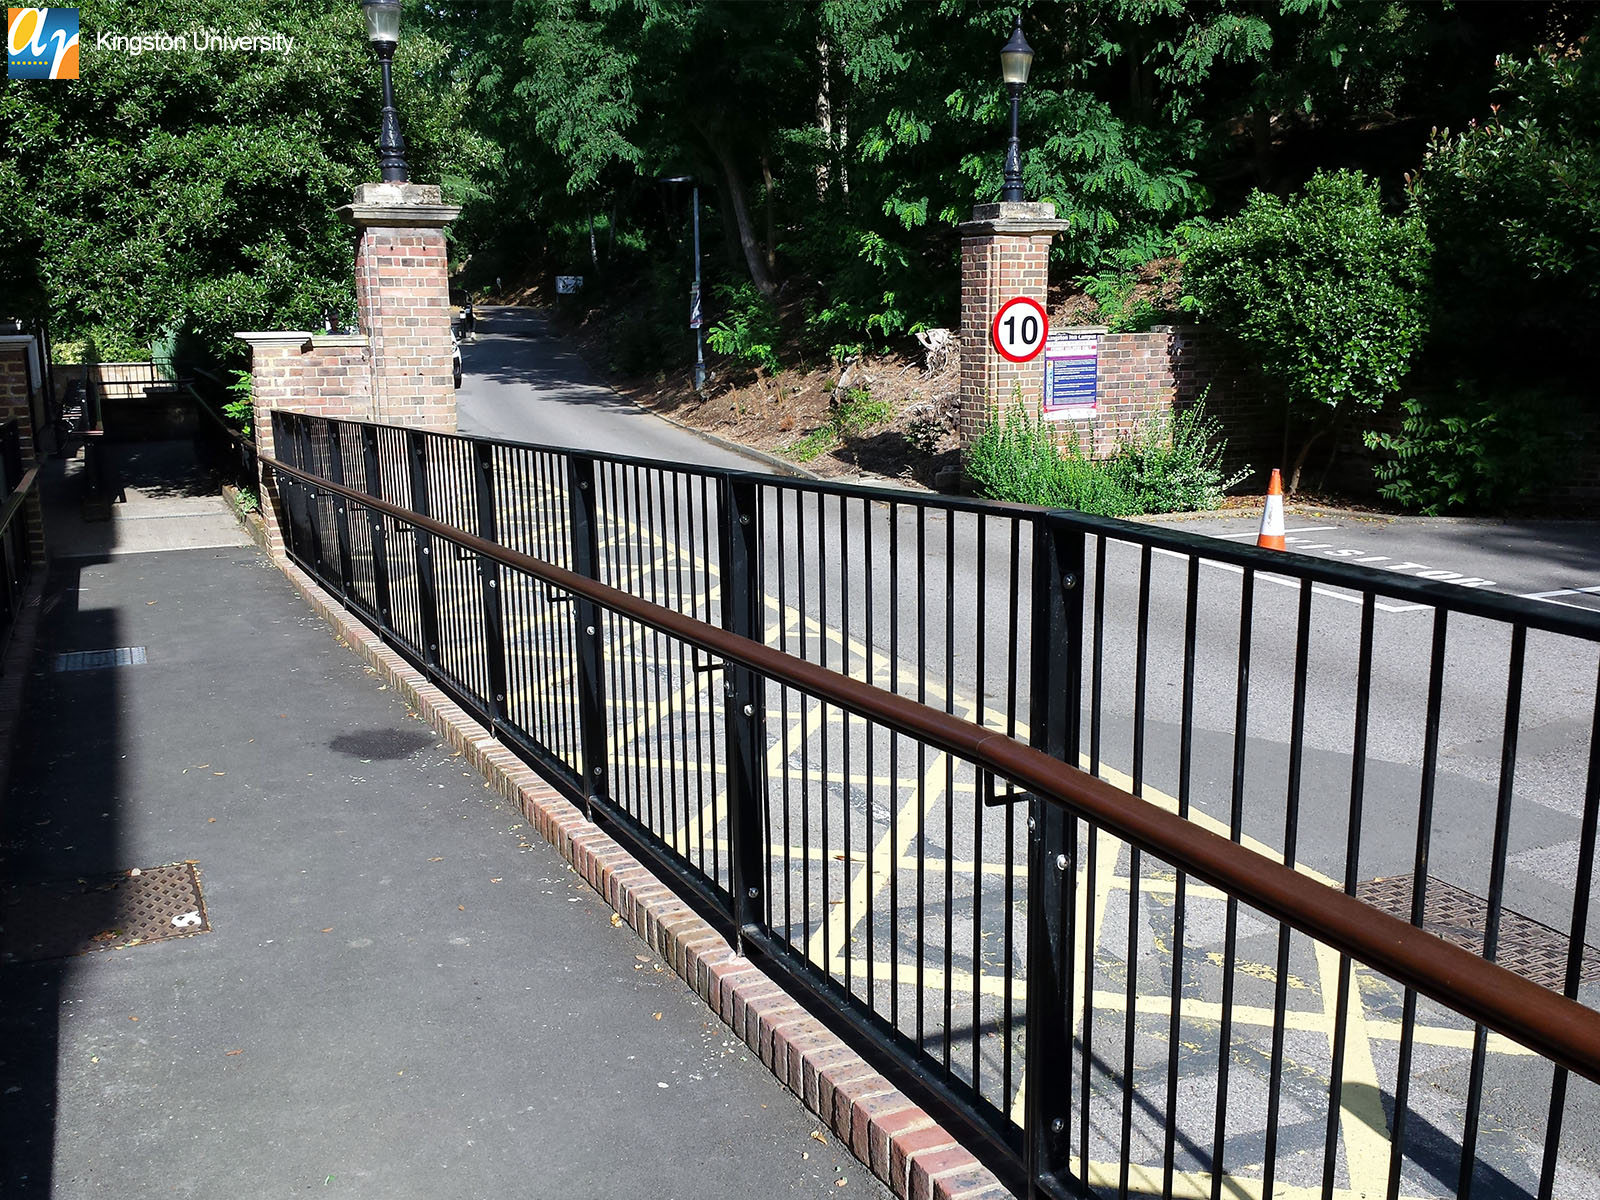 Kingston University metal railings and handrail